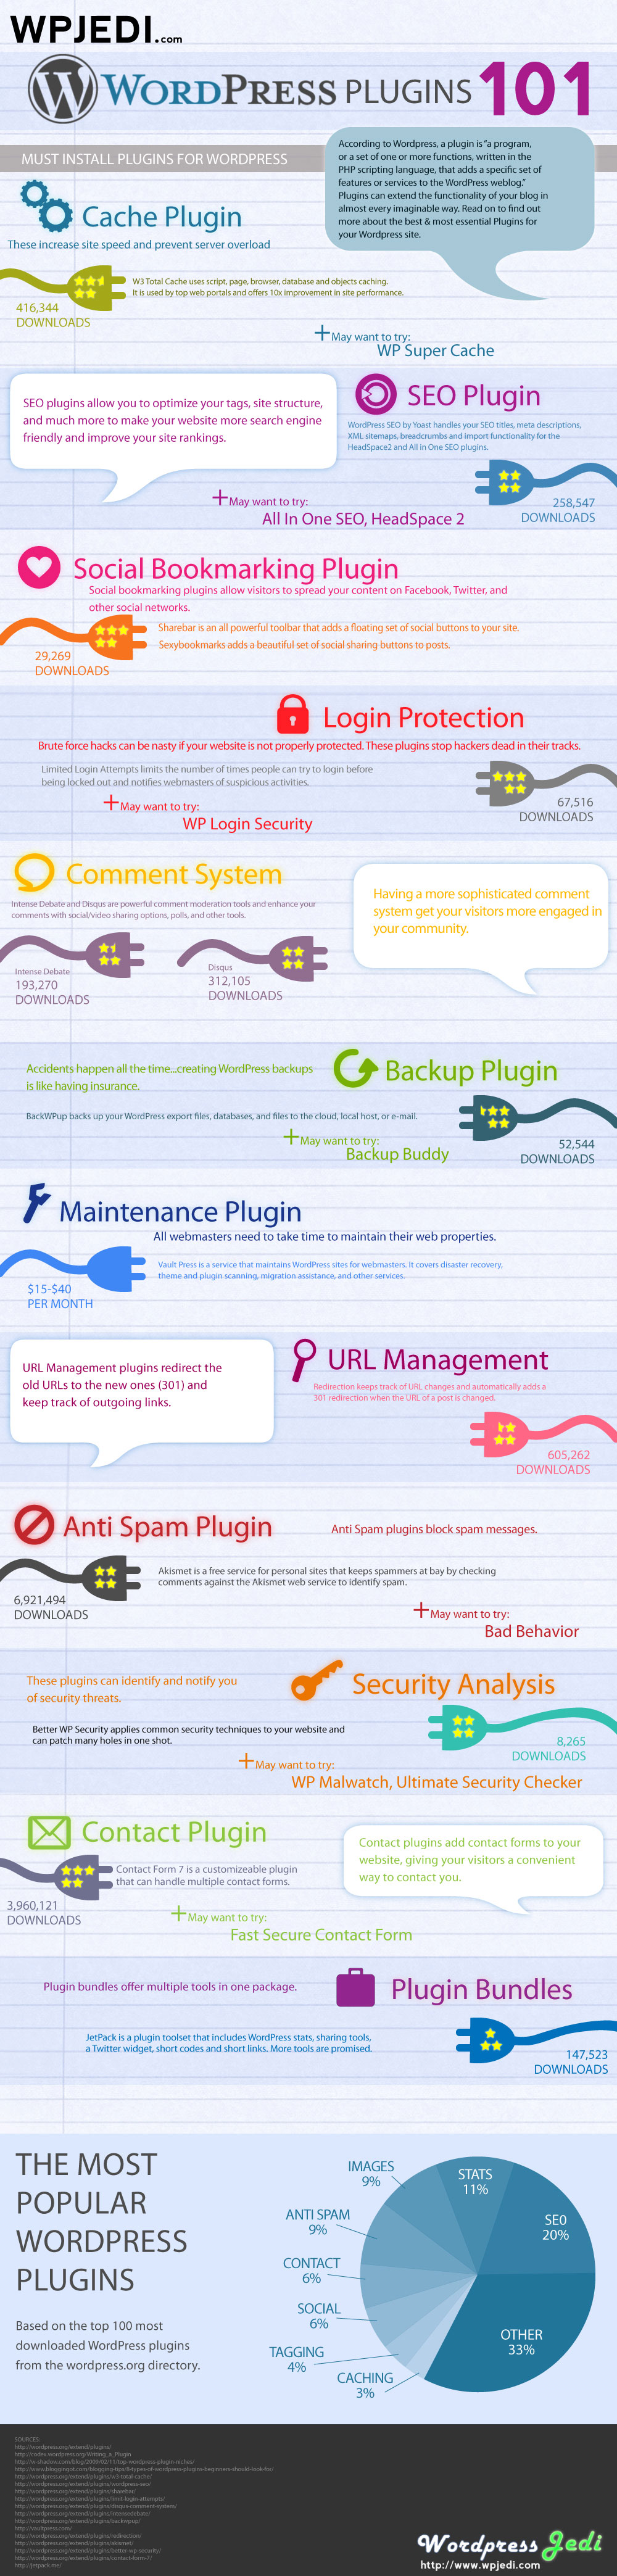 Must have WordPress plugins [infographic]